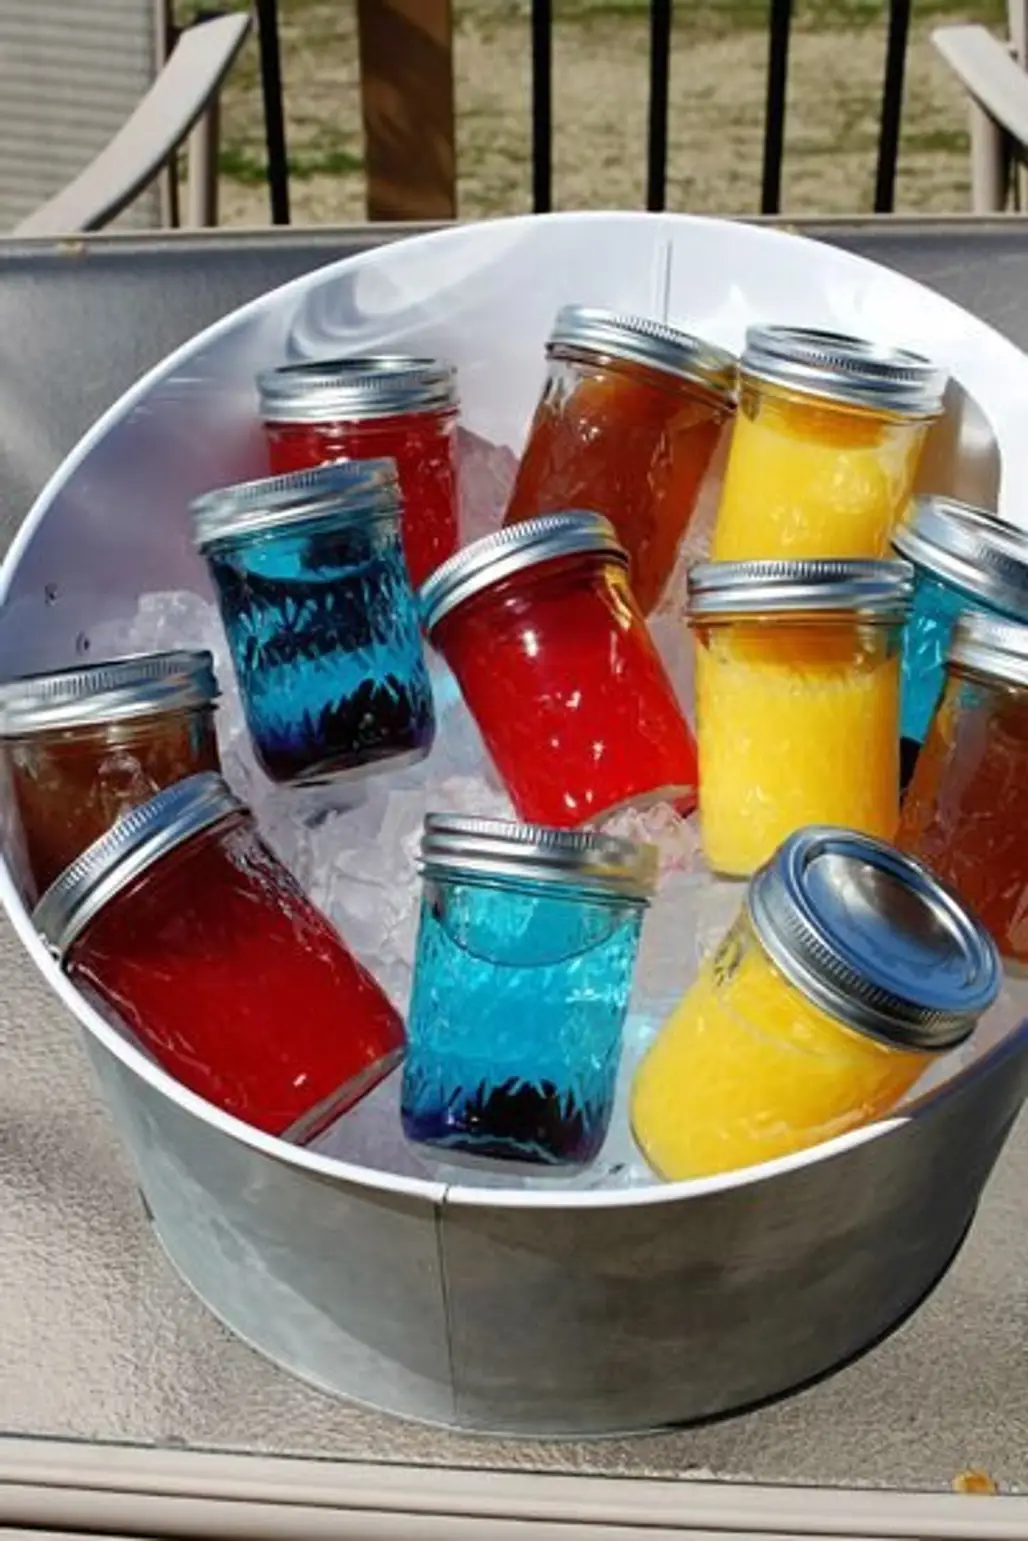 Mason Jar Cocktails